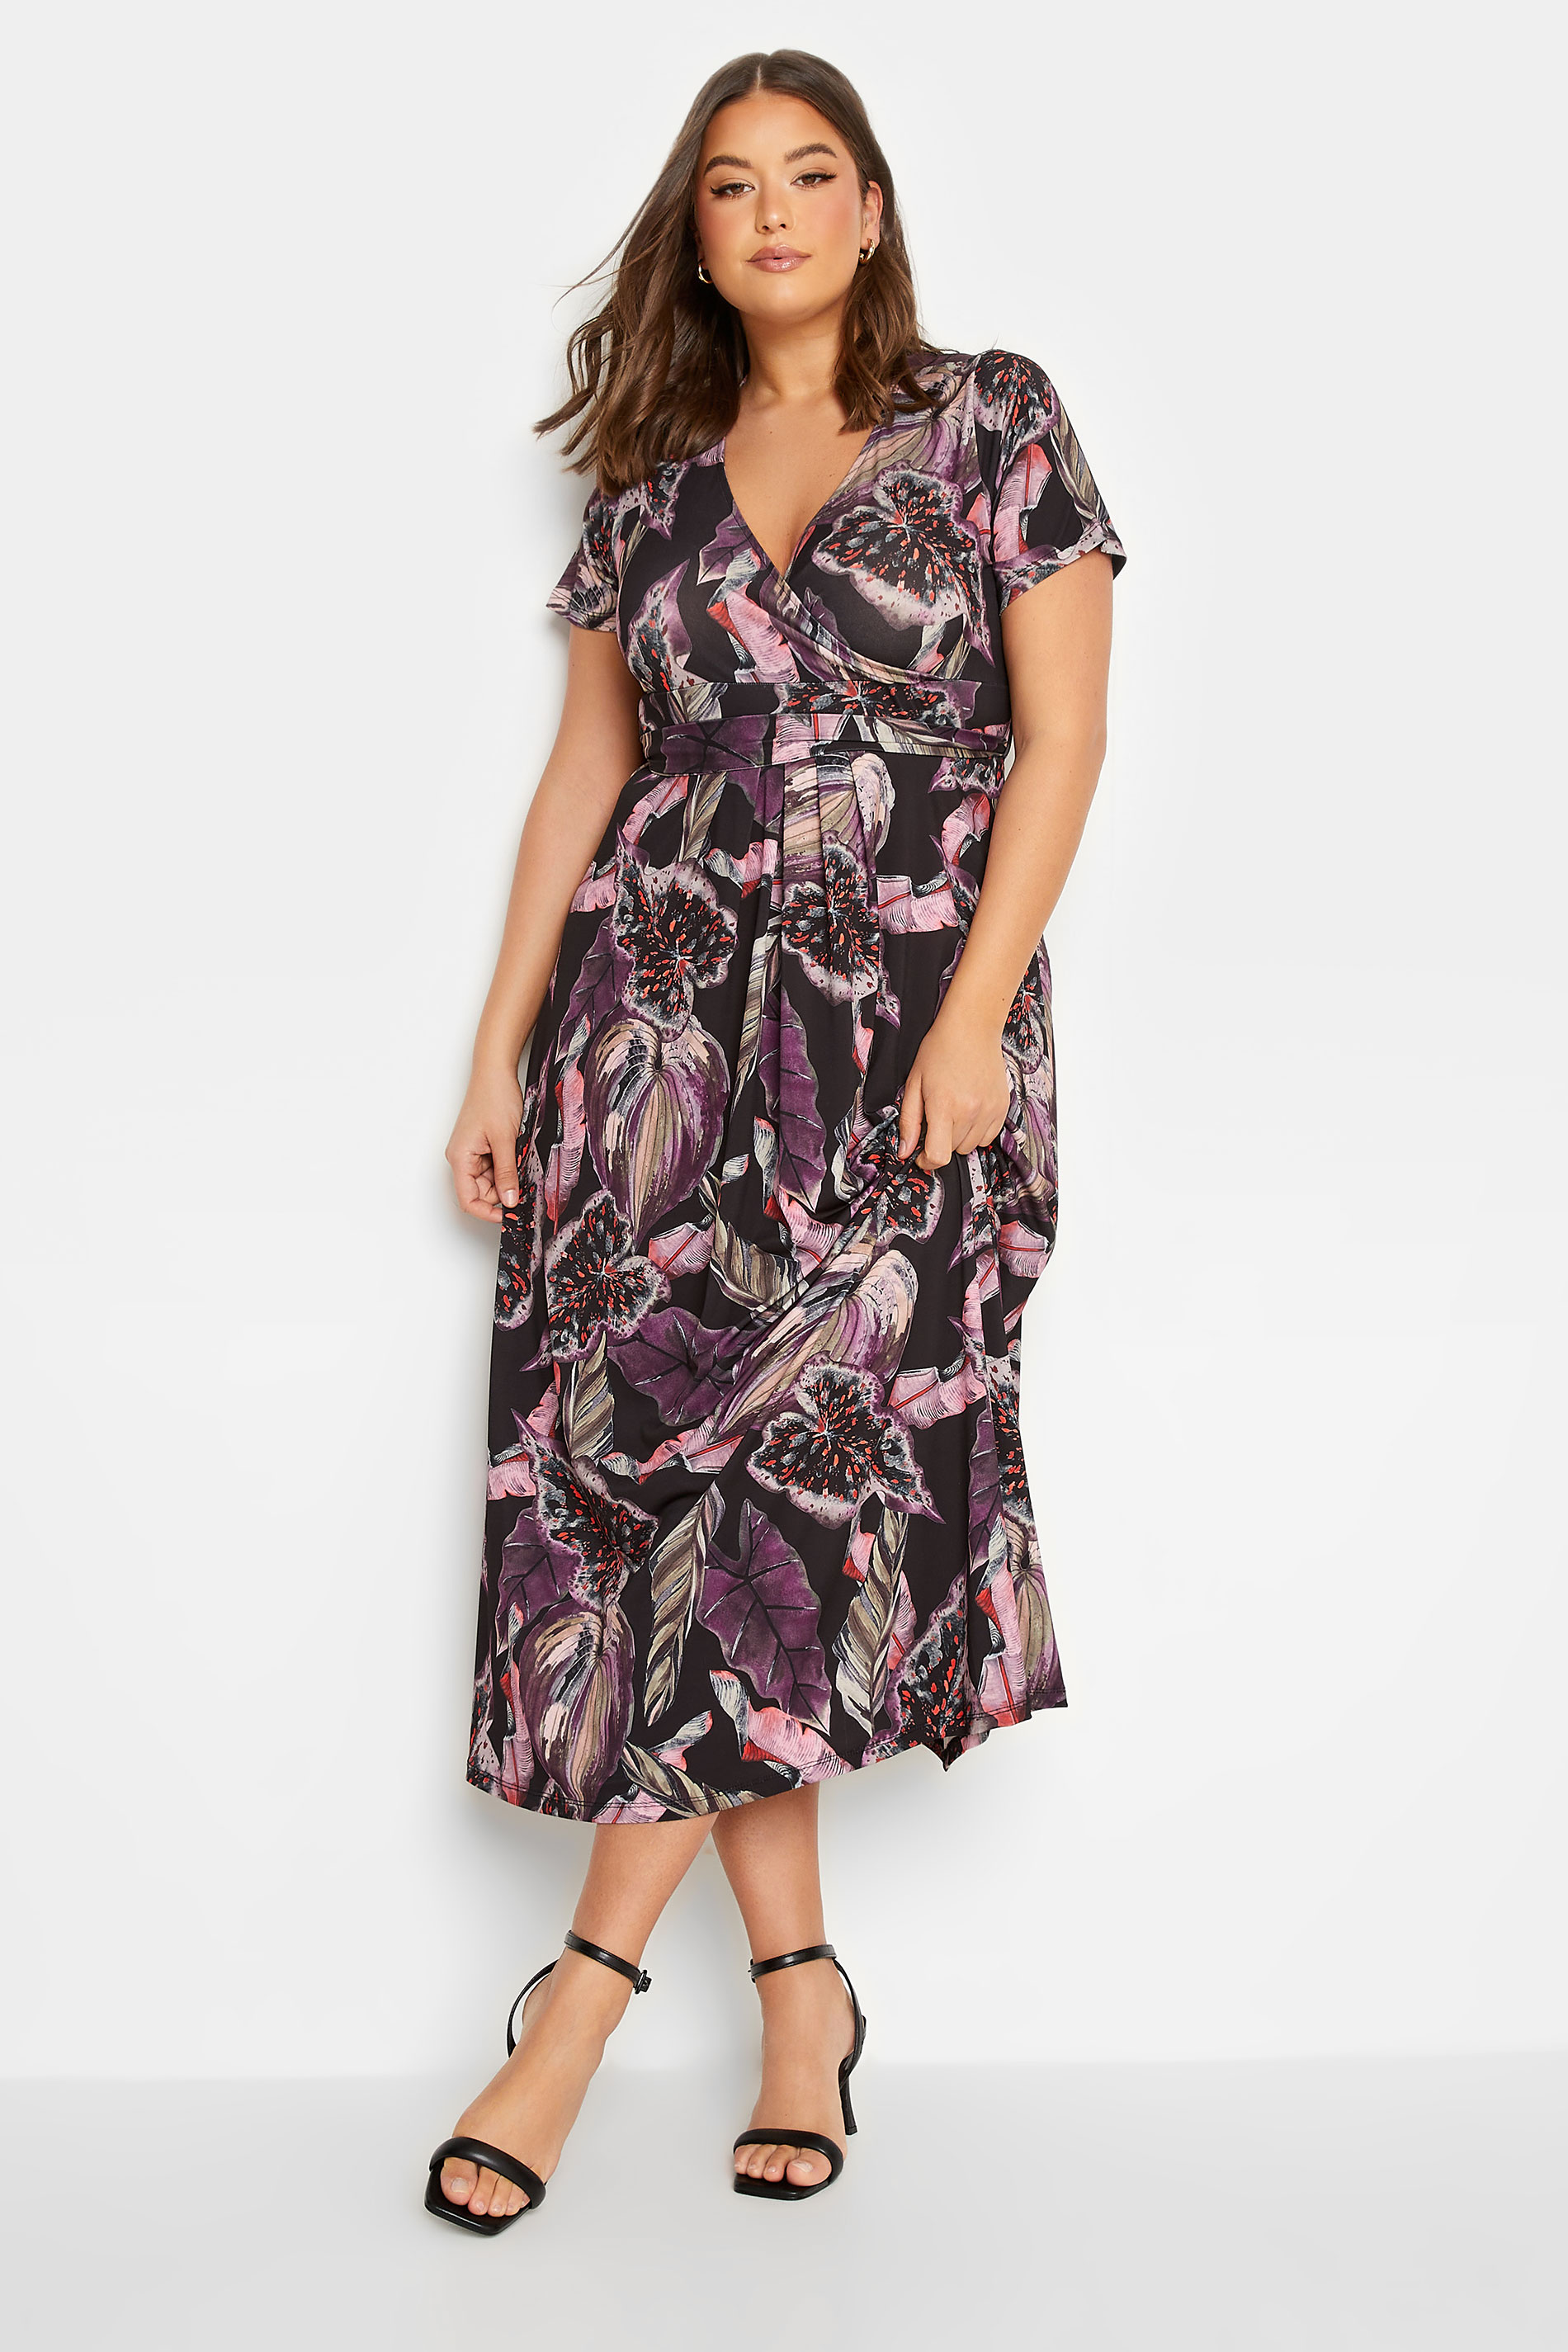 YOURS Curve Plus Size Black Leaf Print Wrap Dress | Yours Clothing  2